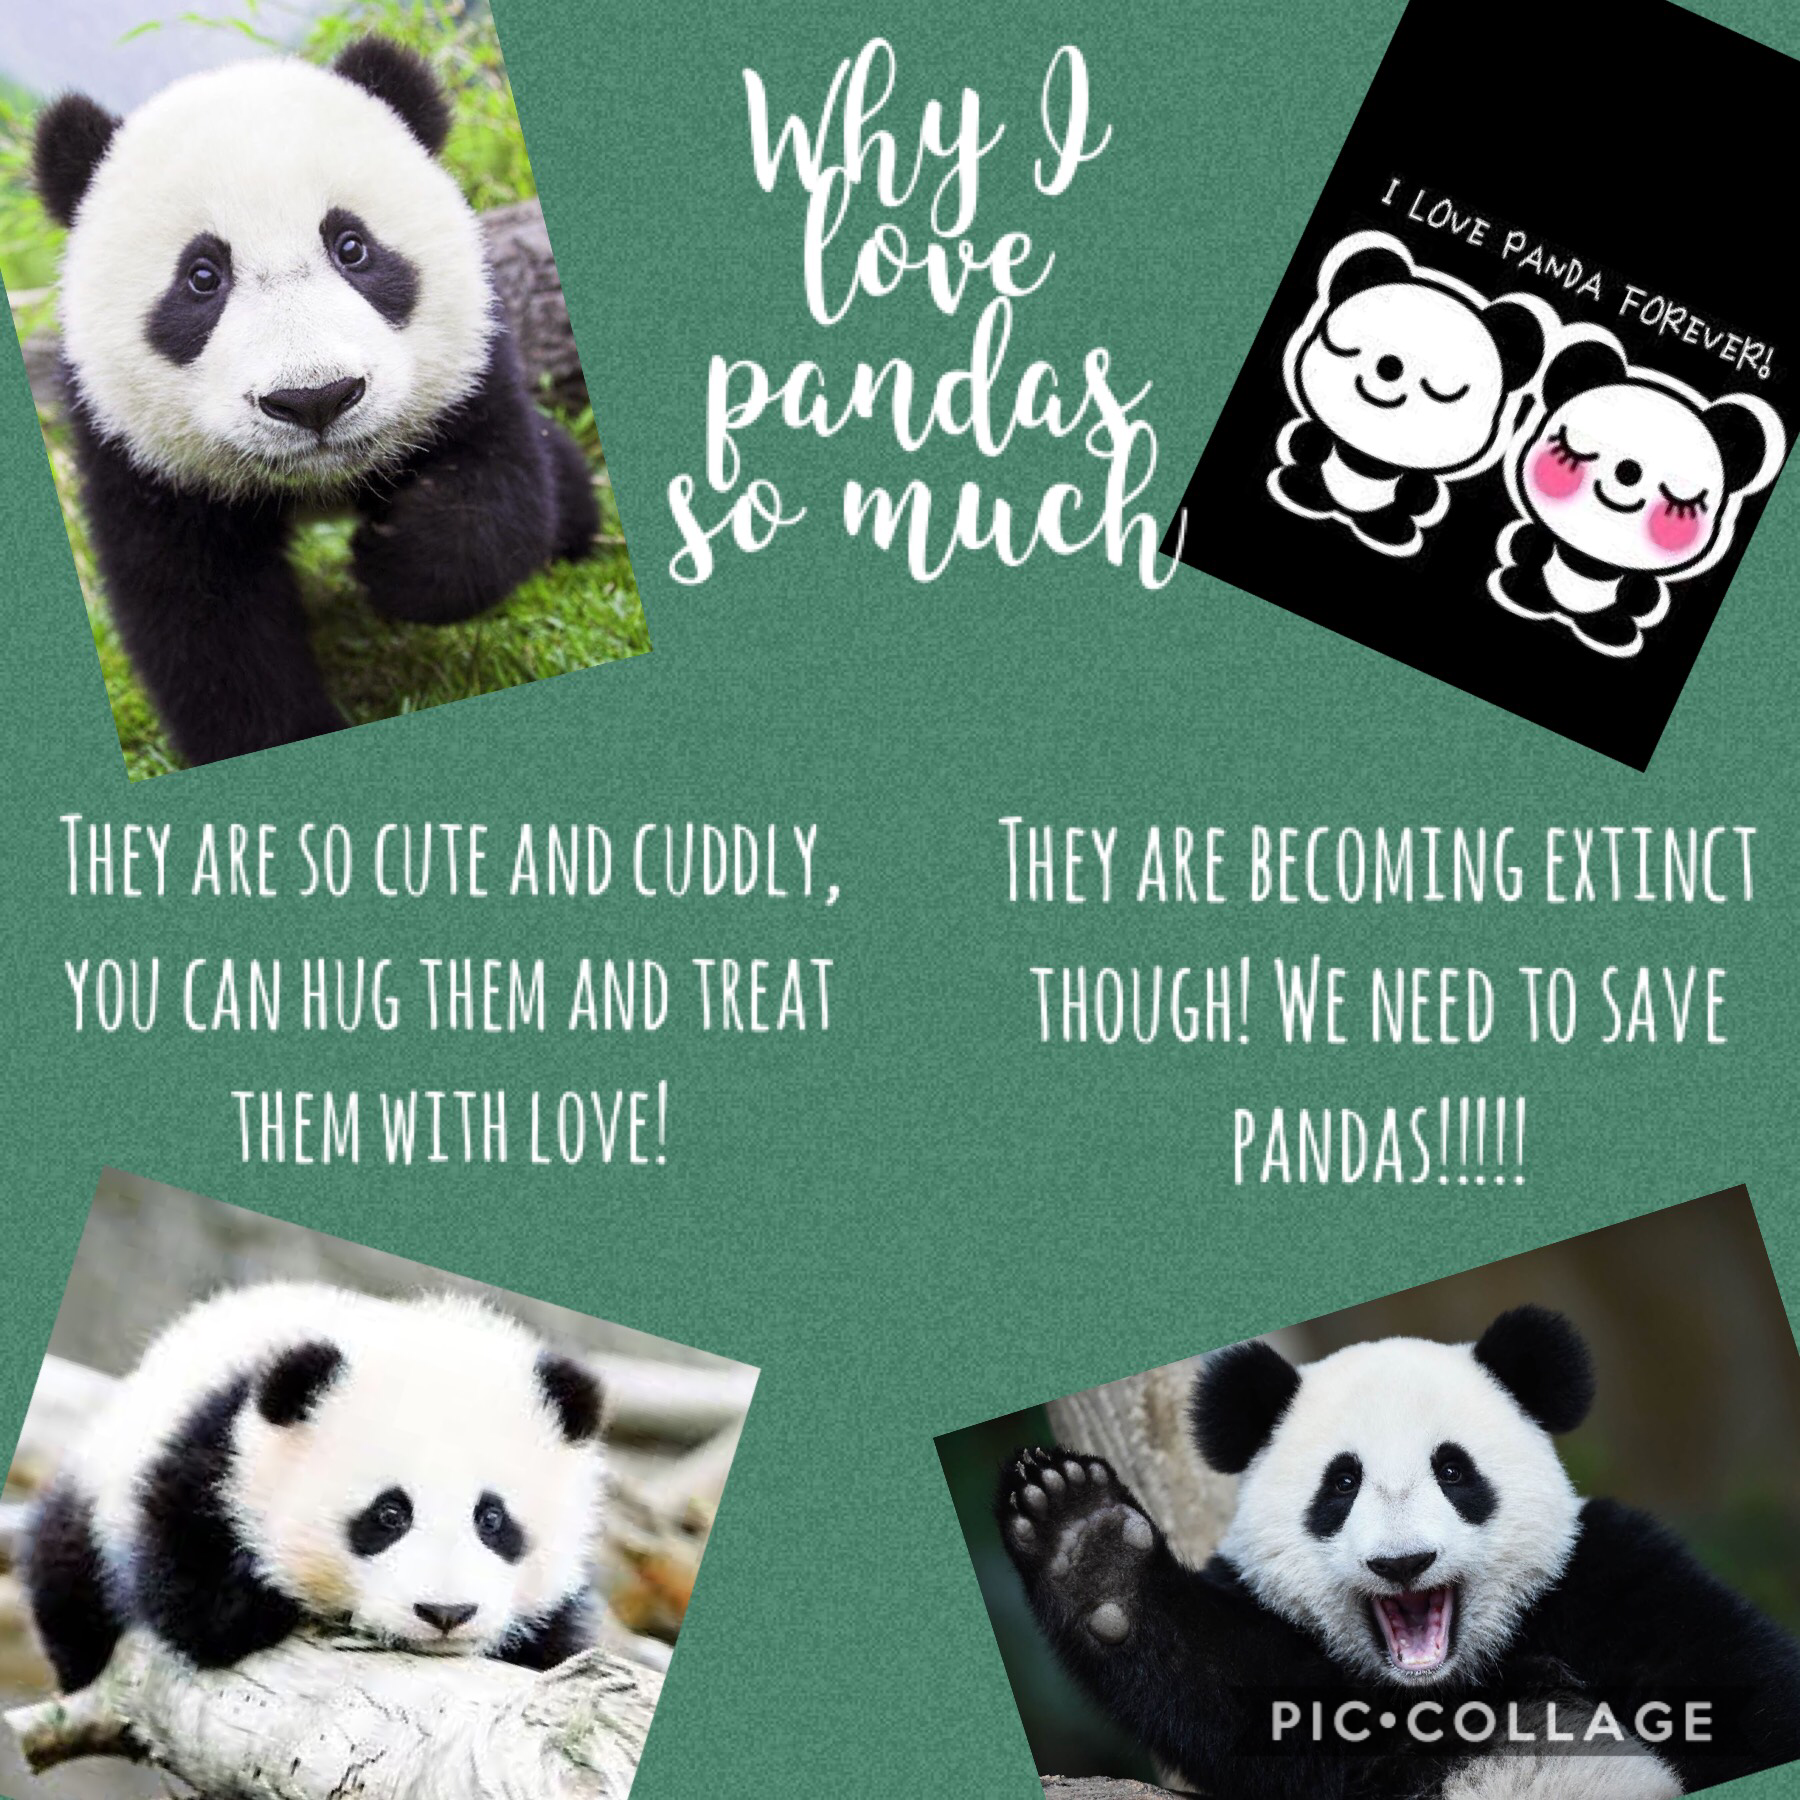 Save pandas!!!